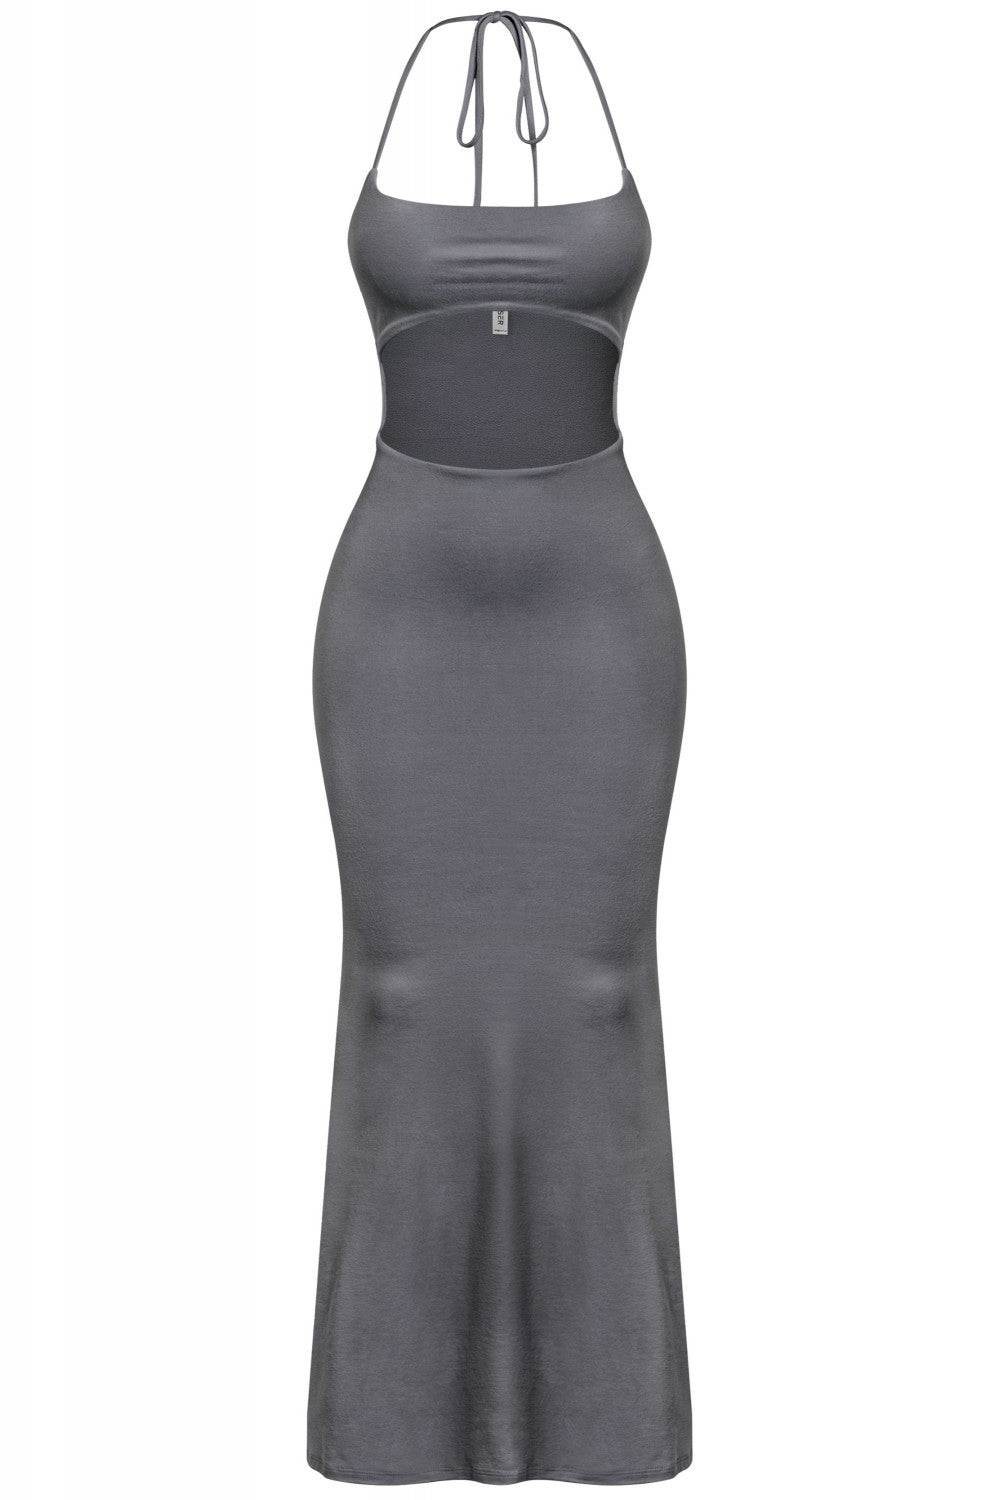 Zuni Mermaid Maxi Dress (Charcoal Grey)